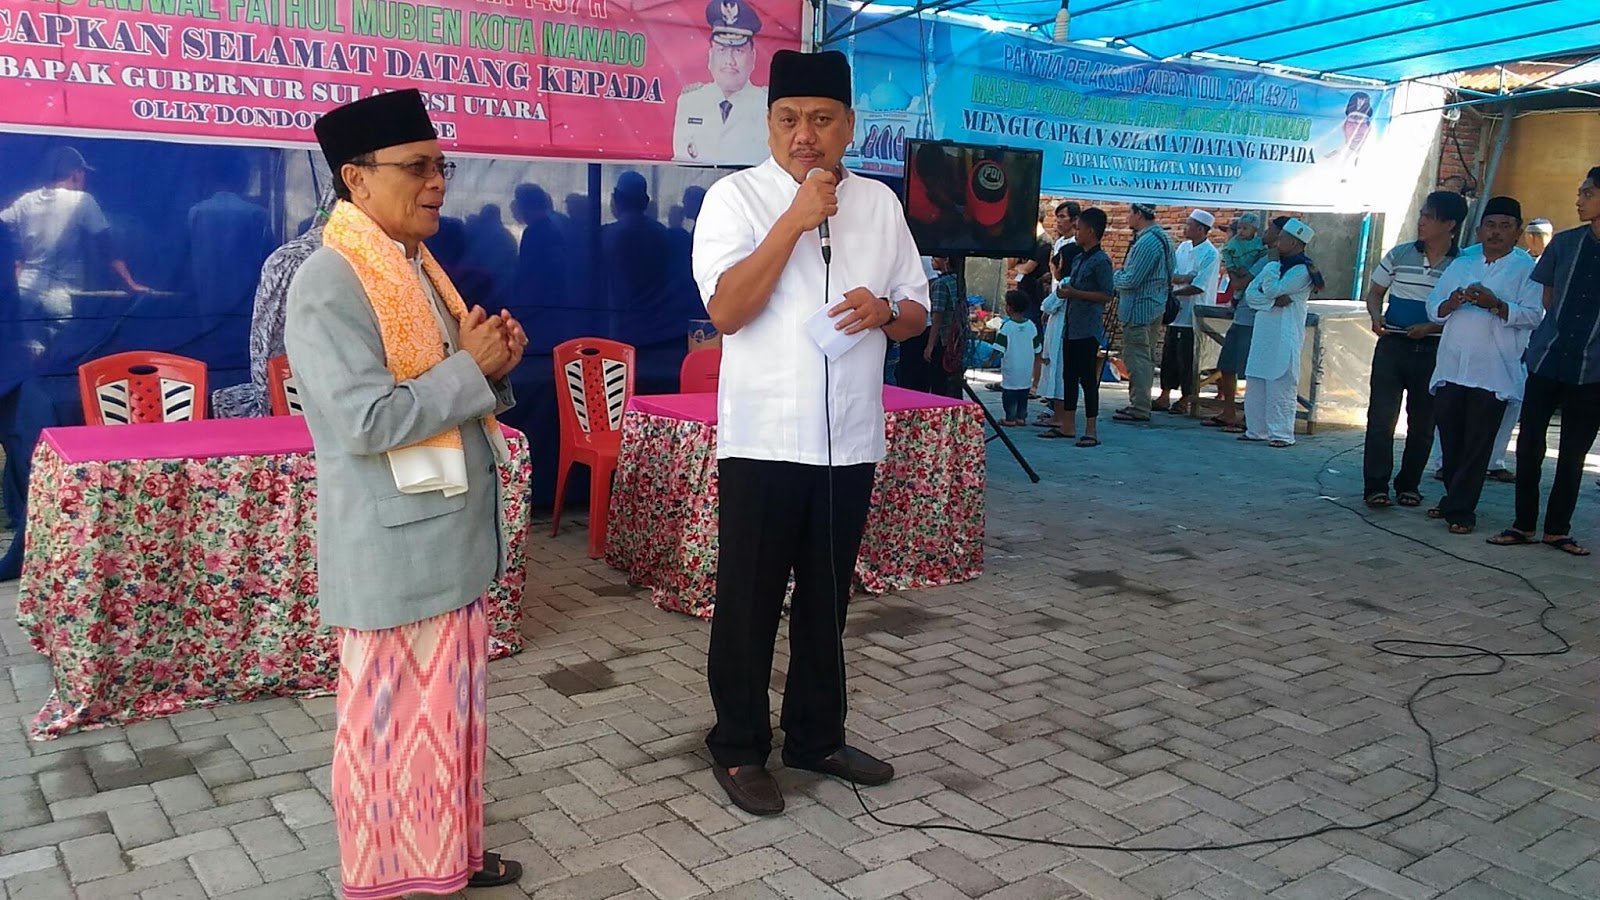 Humas Provinsi Sulawesi Utara: Diserahkan Gubernur Sapi 